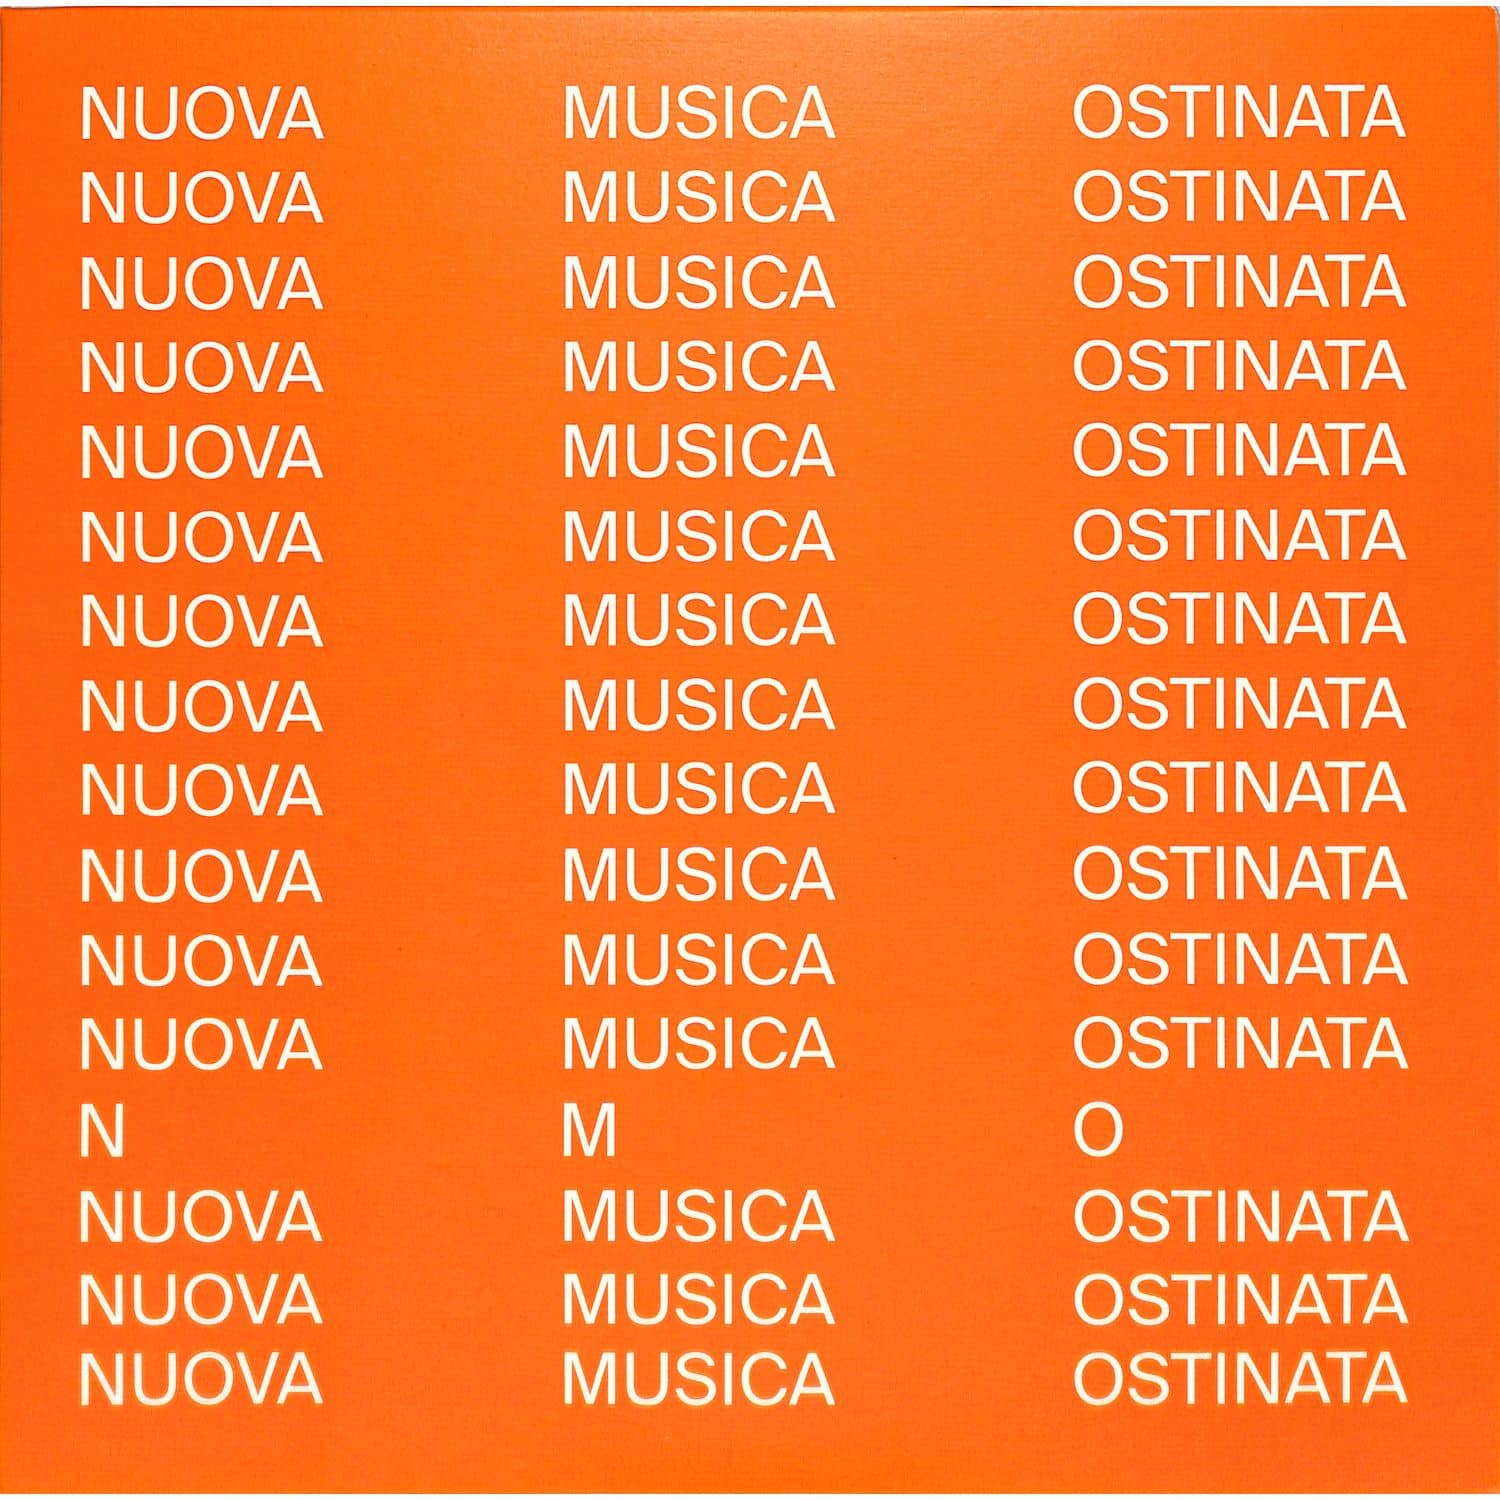 N.M.O. - NUOVA MUSICA OSTINATA